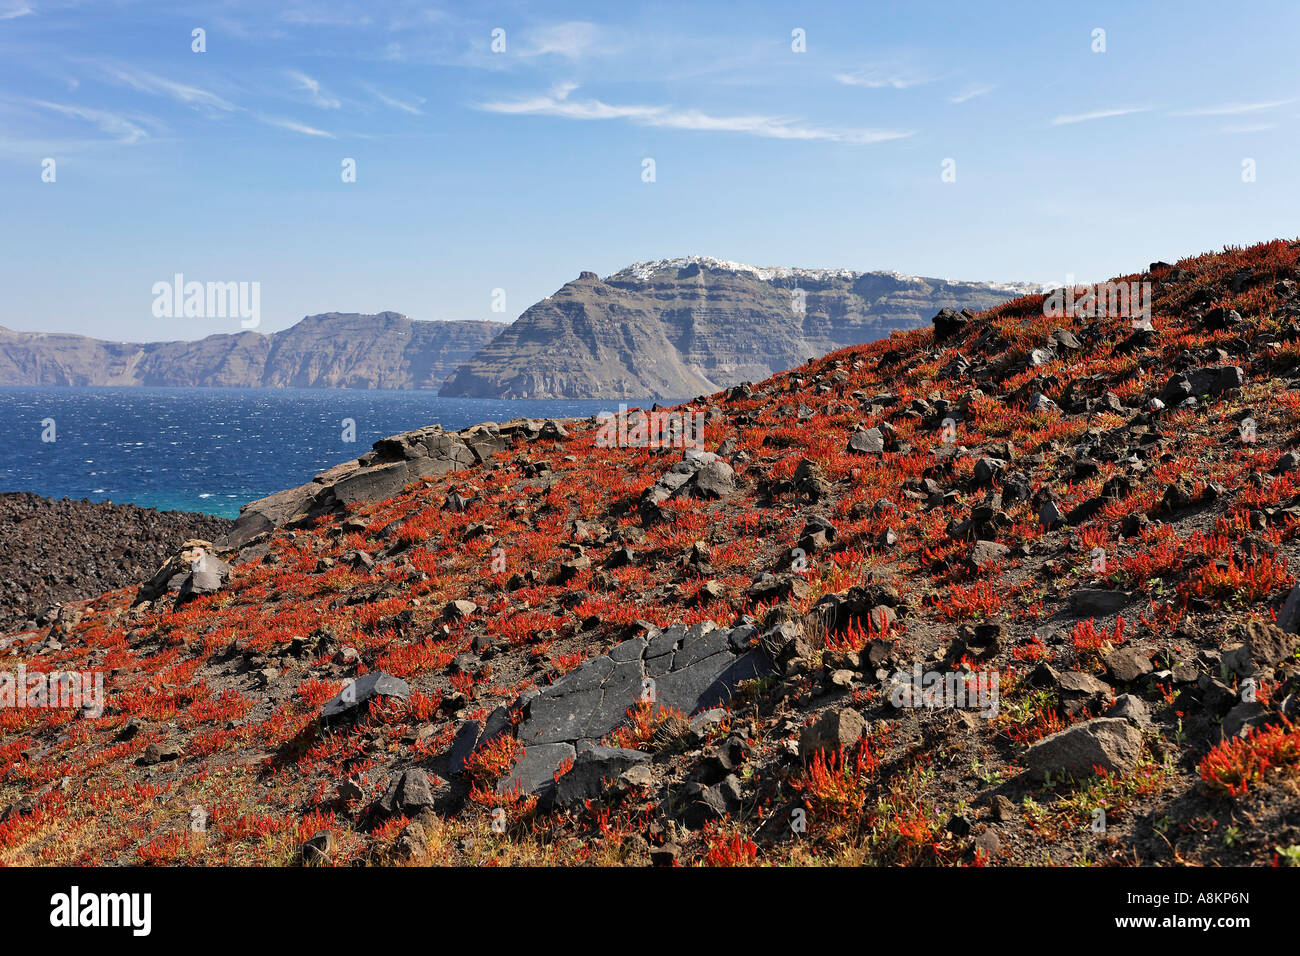 Volcanic island Nea Kameni, Santorini, Greece Stock Photo